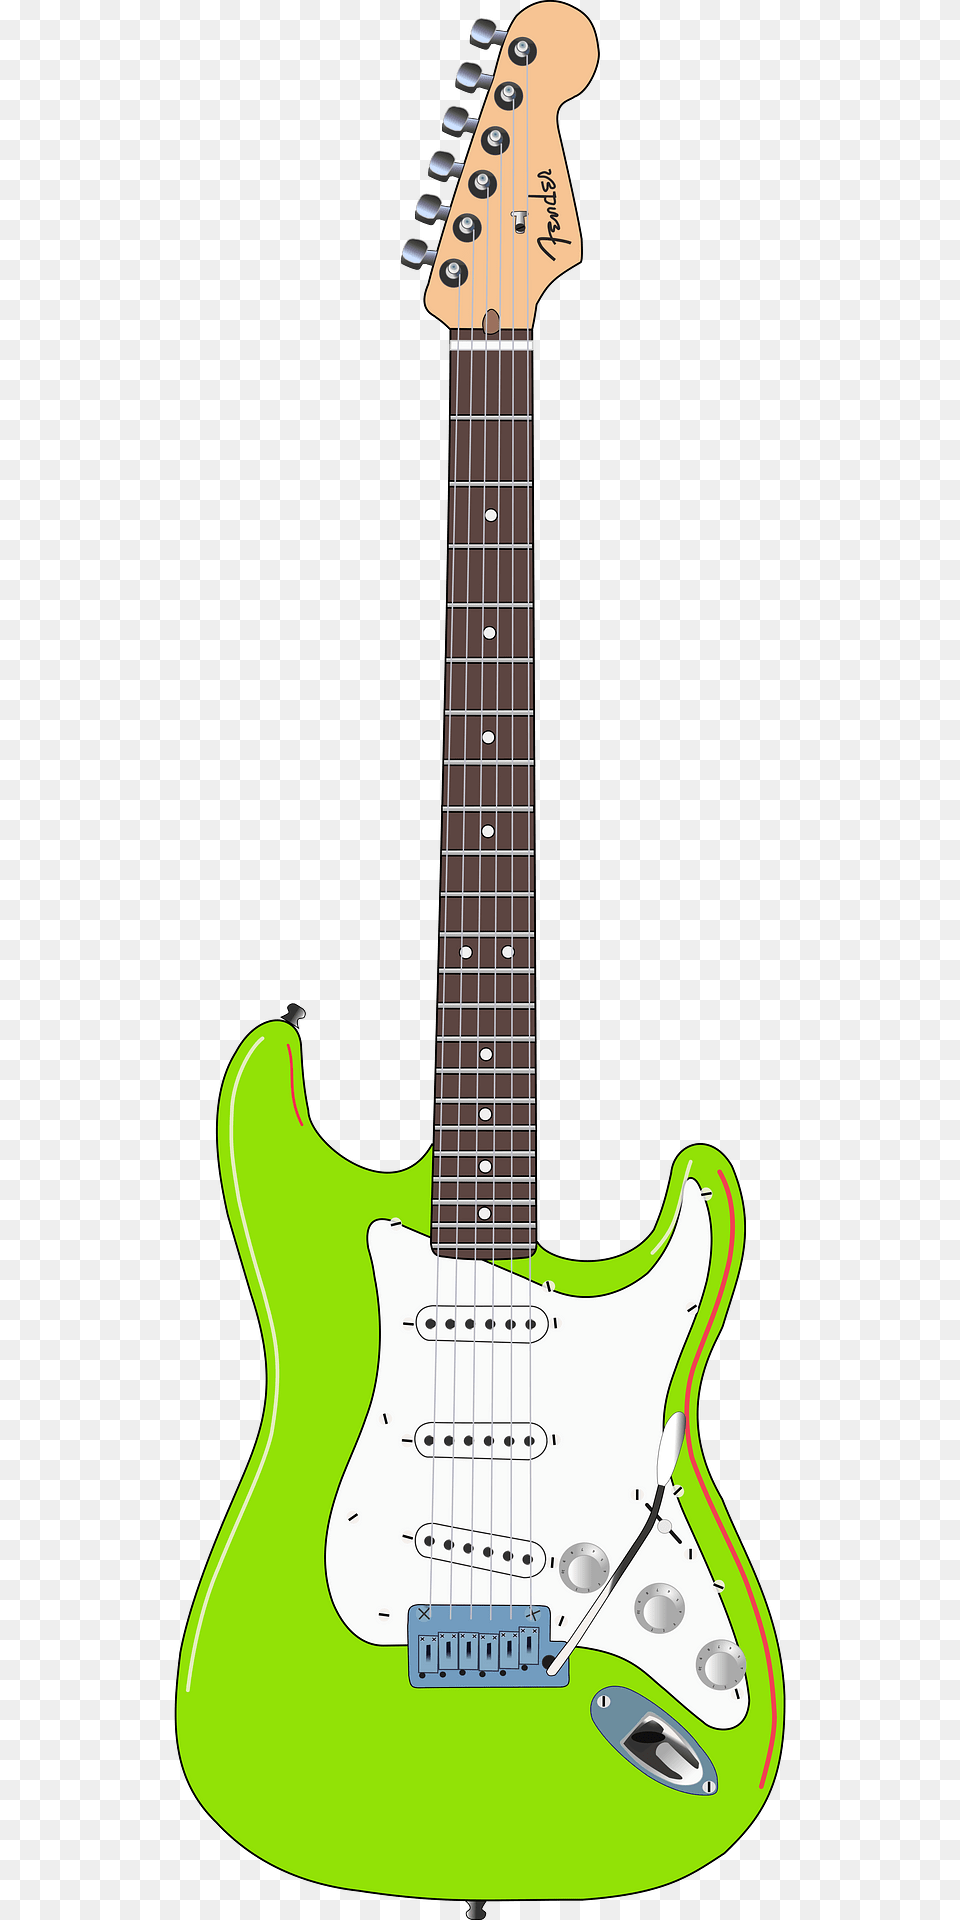 Guitar Clipart, Bass Guitar, Musical Instrument, Electric Guitar Png Image